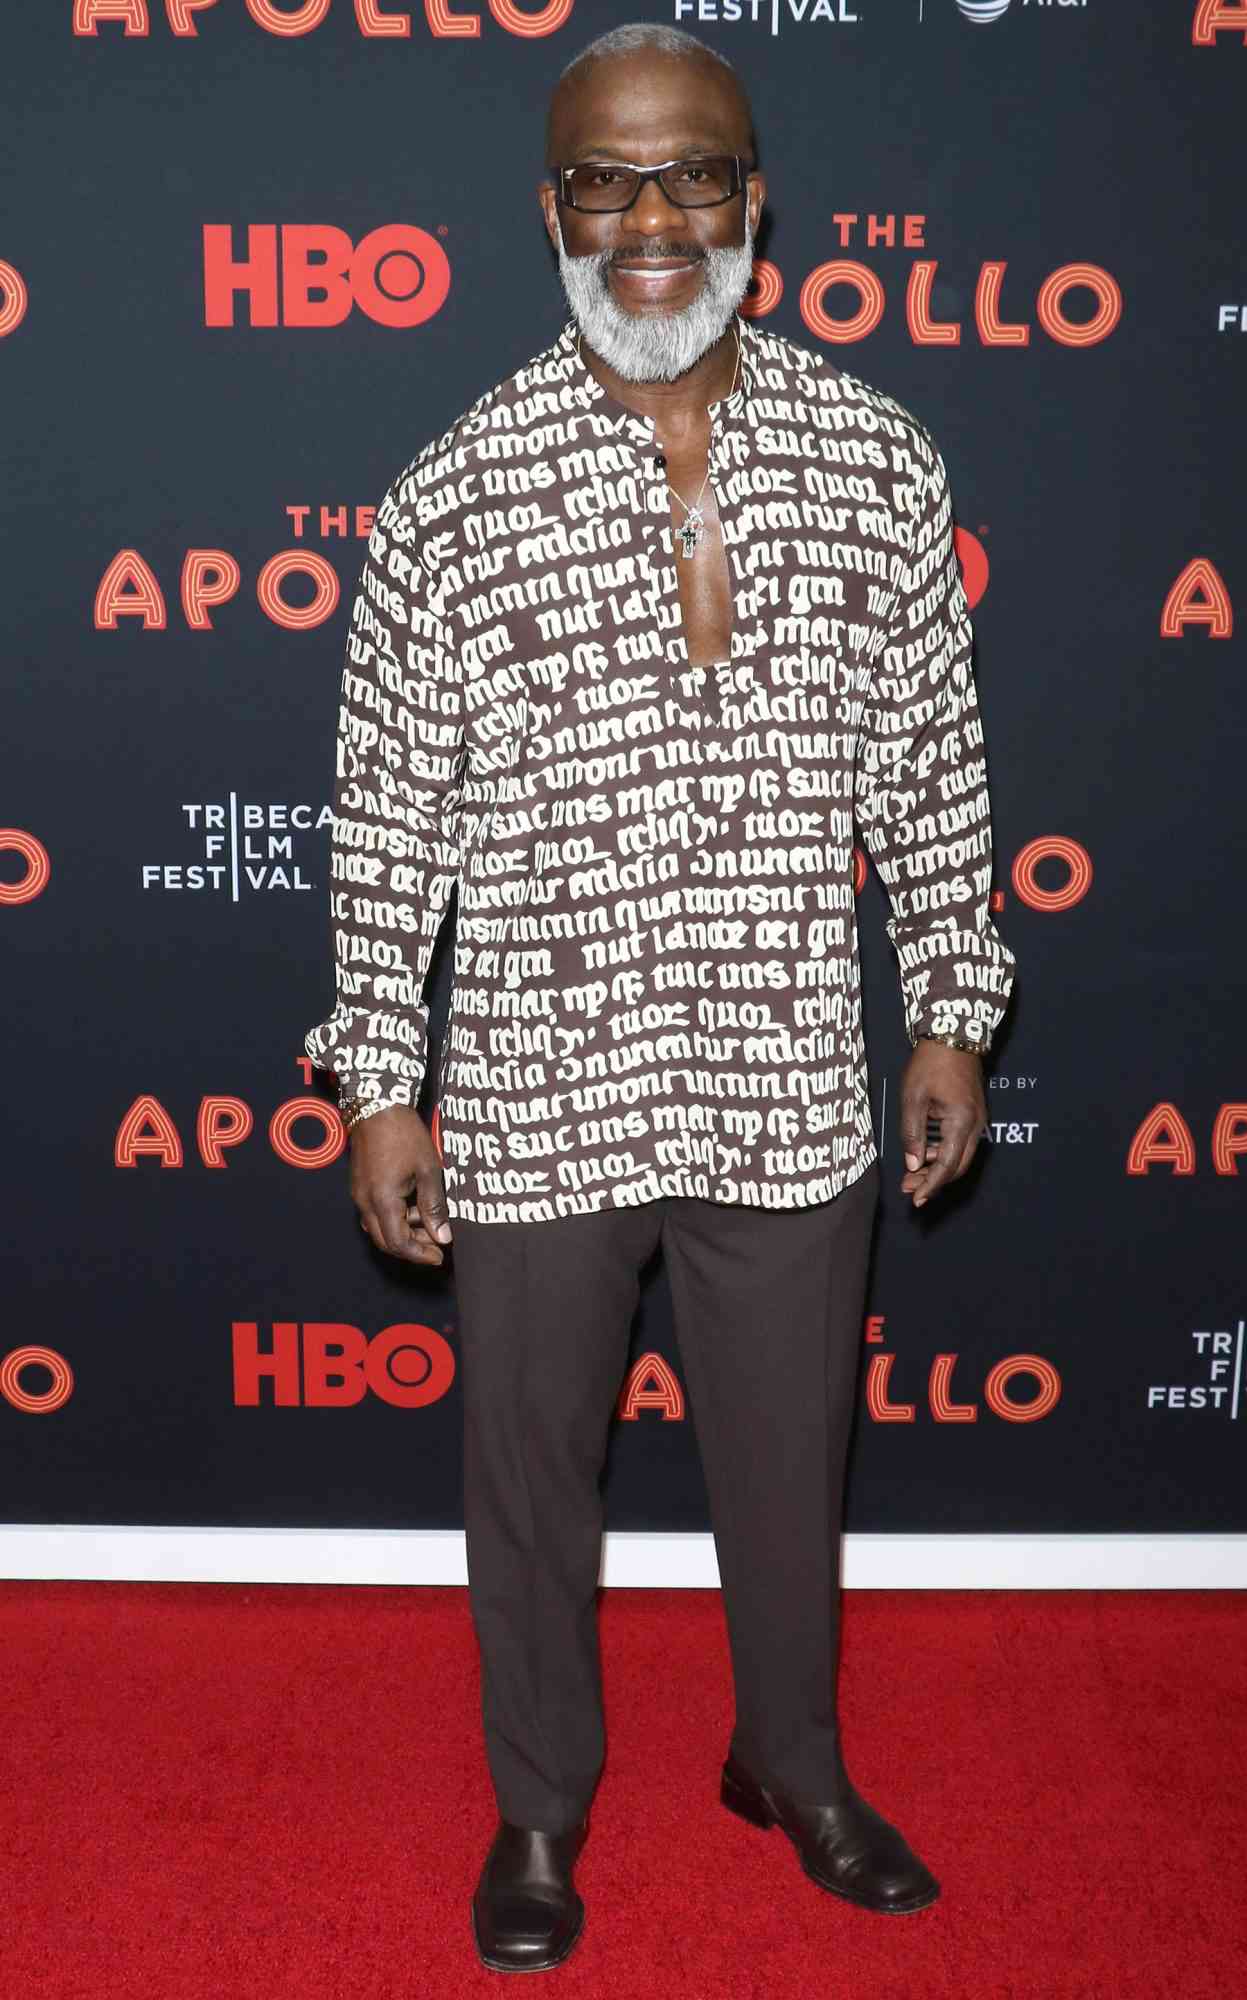 2019 Tribeca Film Festival Opening Night Screening Of "The Apollo"